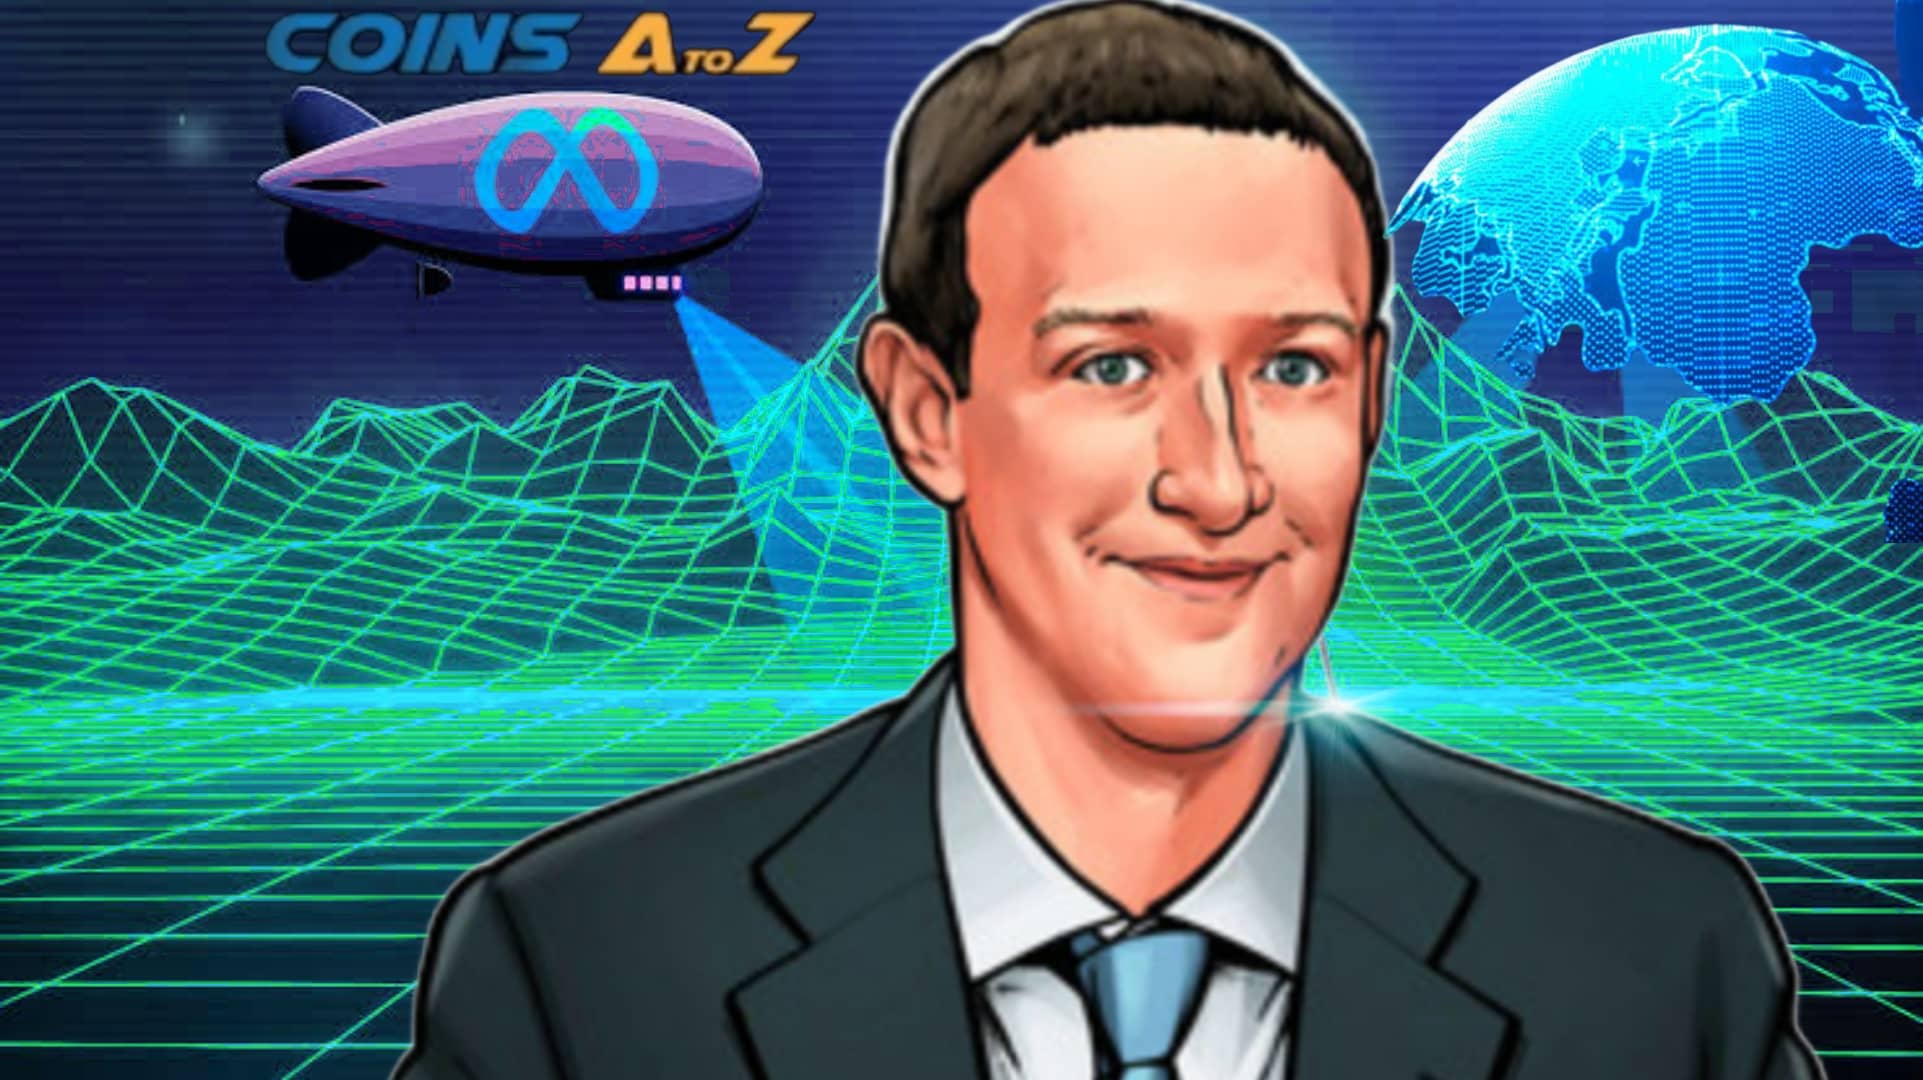 Zuckerberg is still focused on metaverse despite $13.7B setback